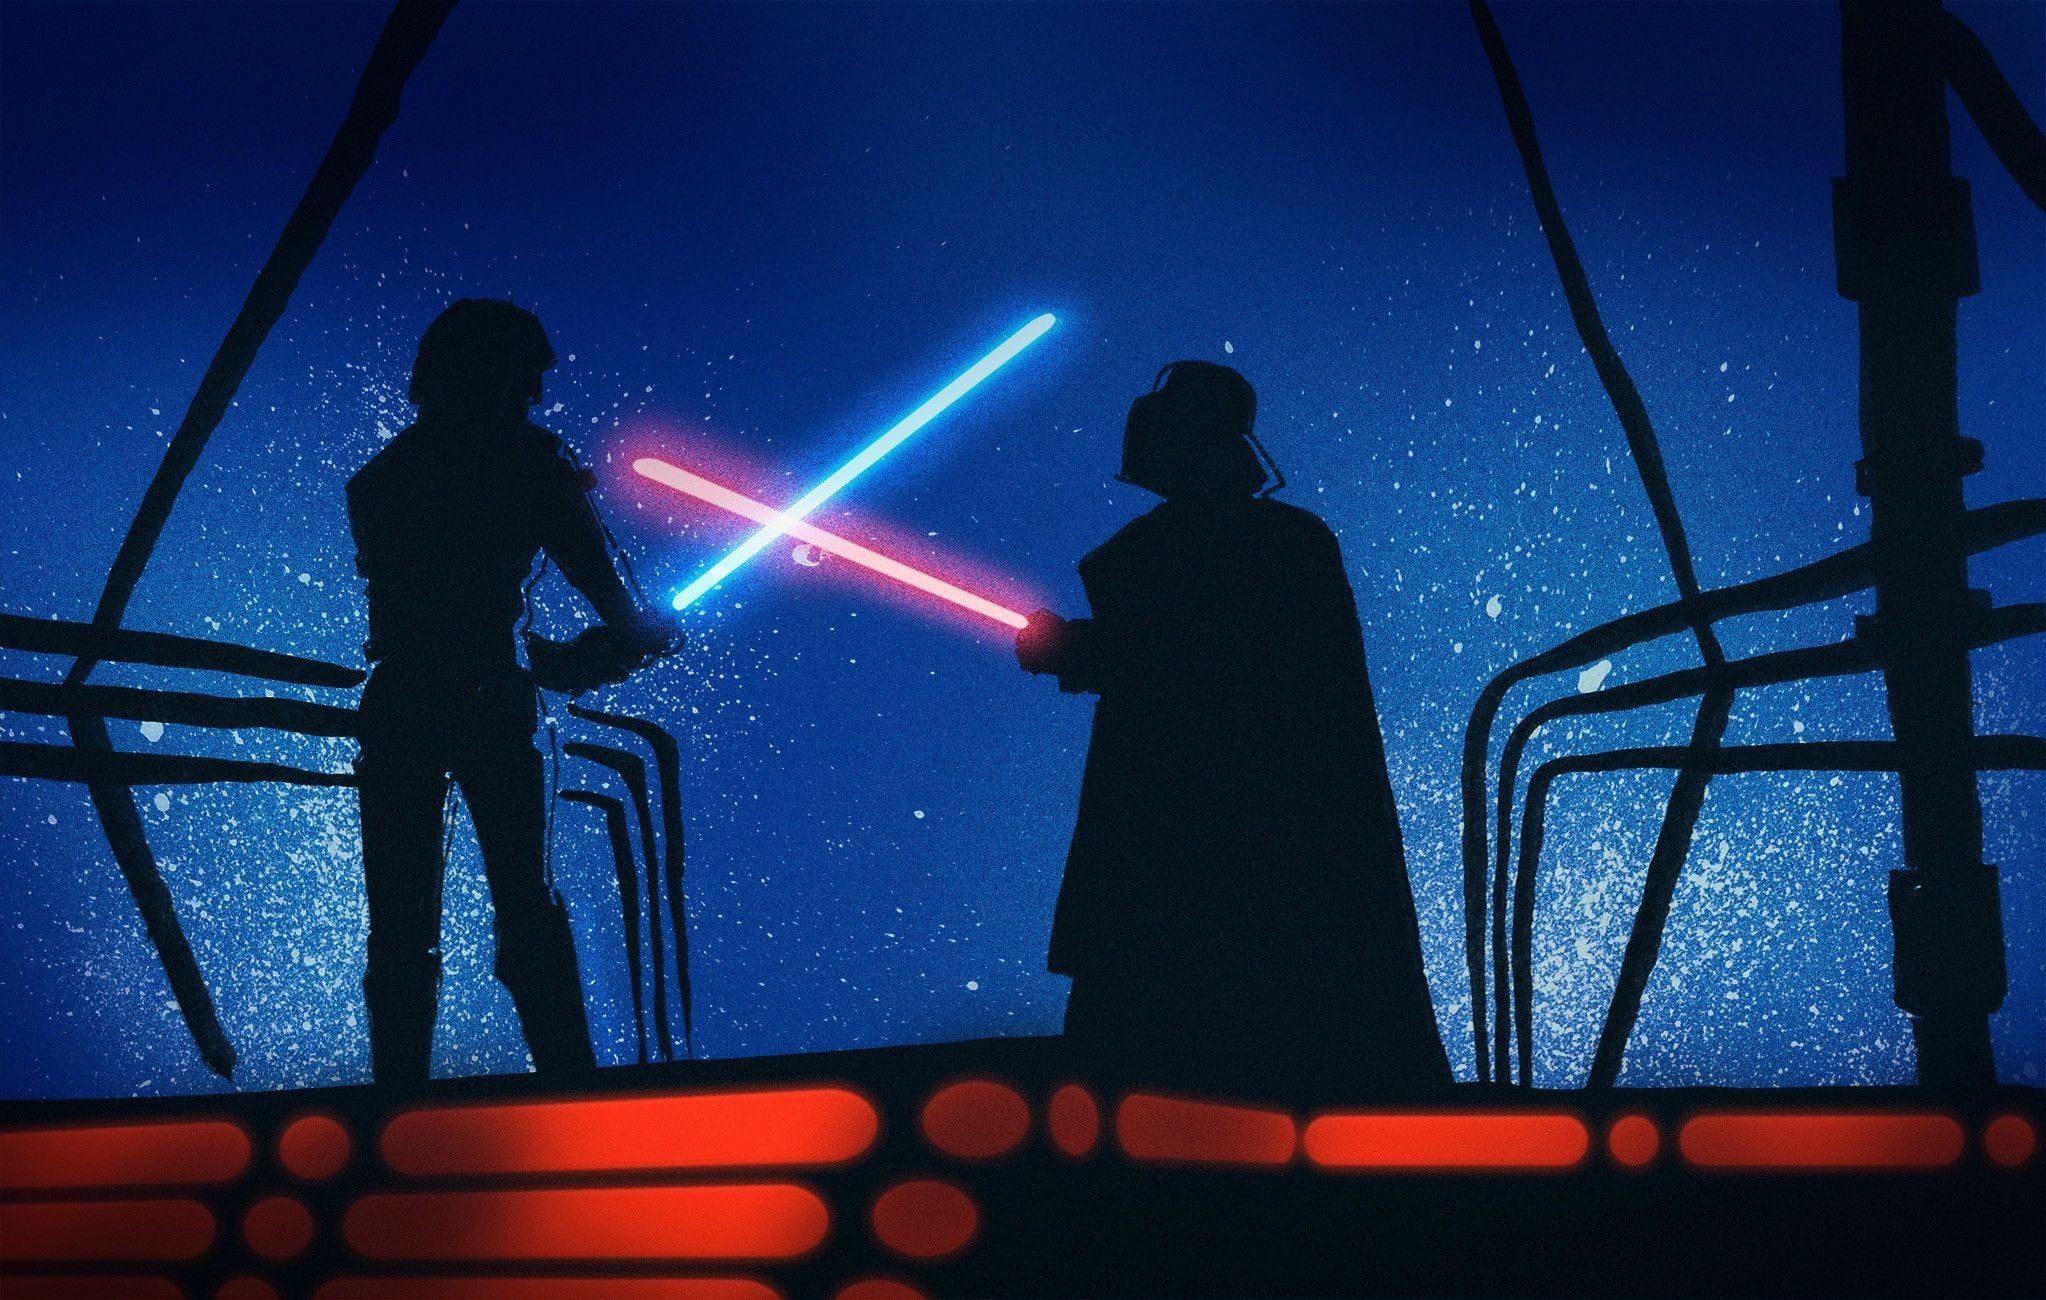 Anakin Skywalker Darth Vader Wallpaper